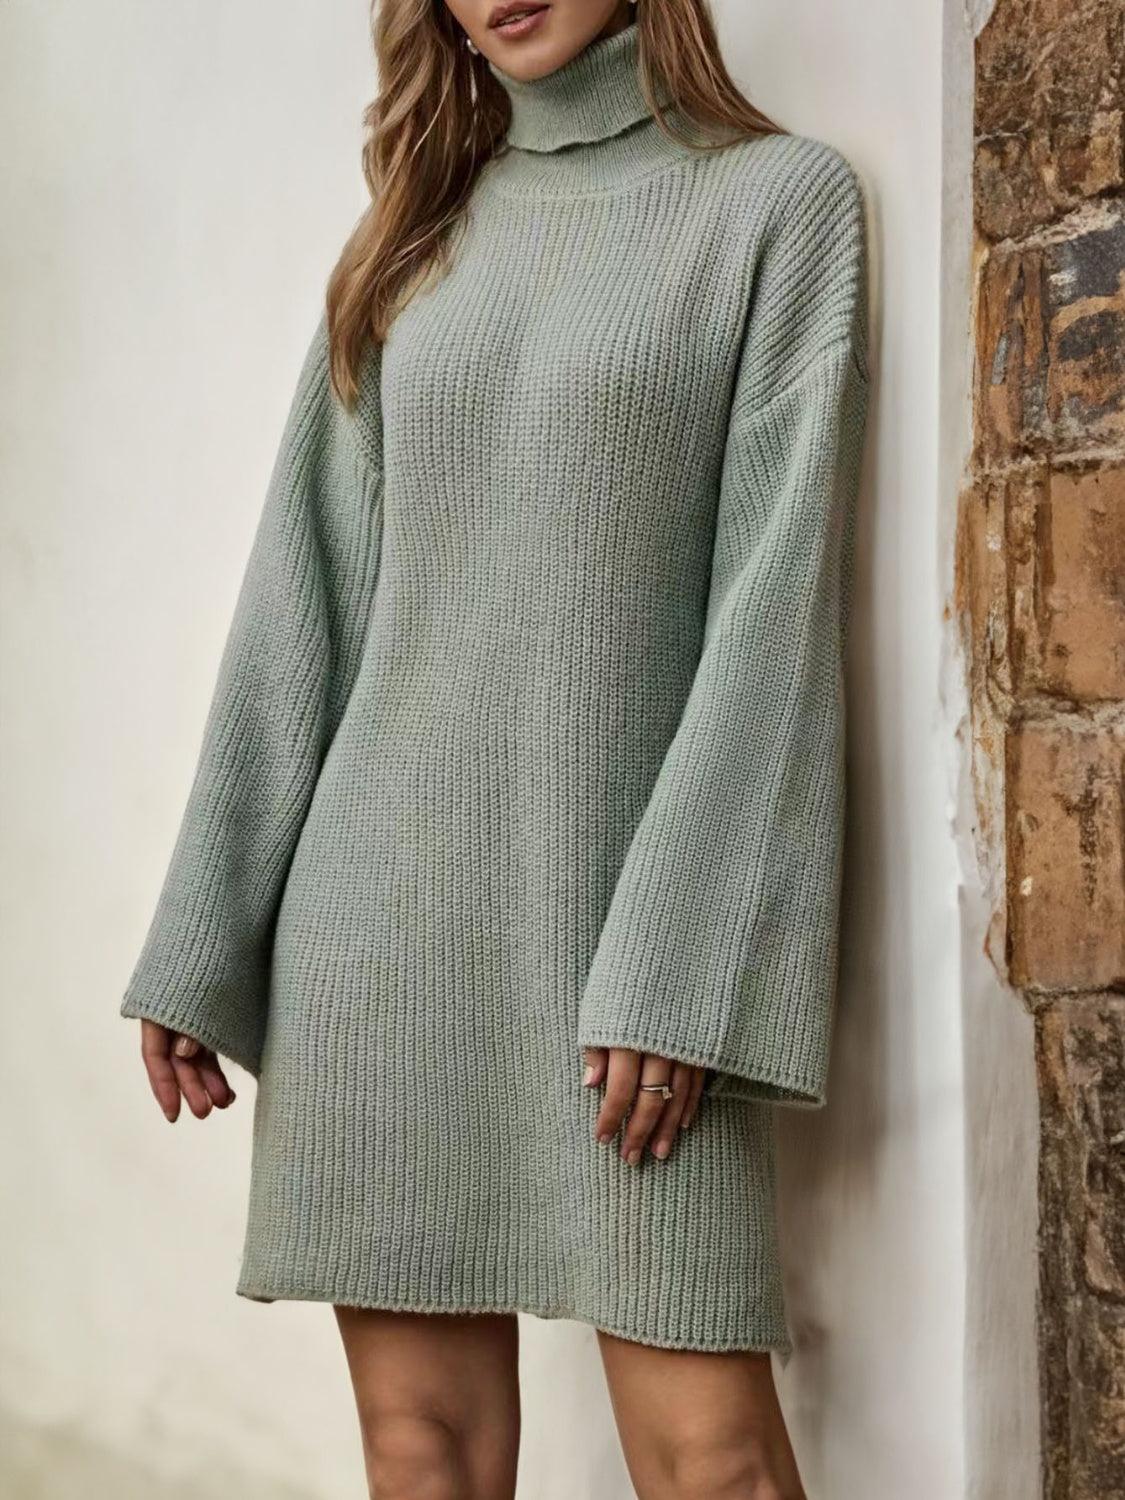 Turtleneck Dropped Shoulder Sweater Dress - Lab Fashion, Home & Health